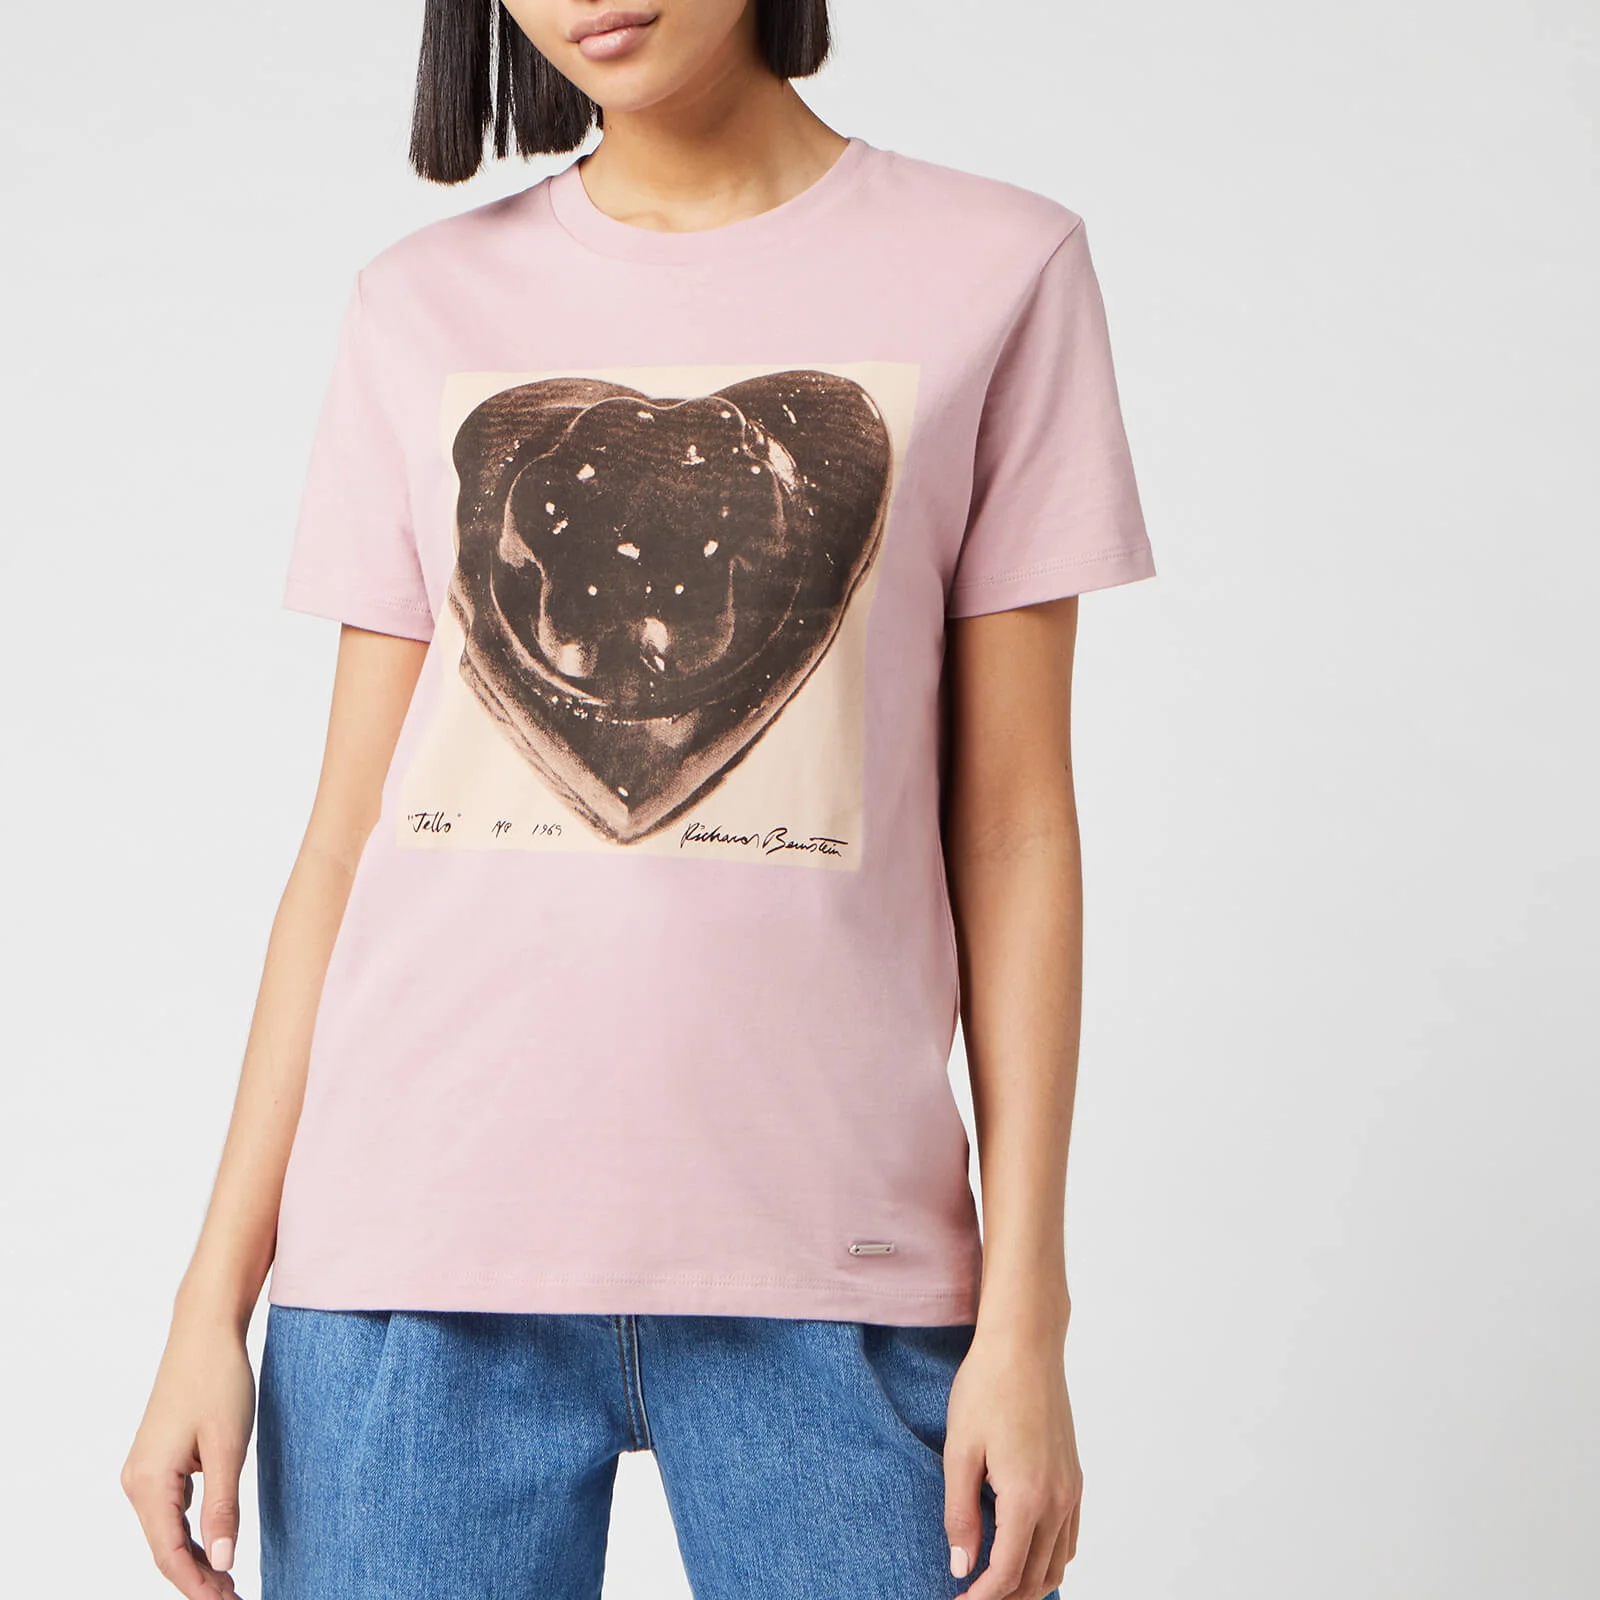 Coach 1941 Women's Black Jello Heart Classic T-Shirt - Baby Pink Image 1